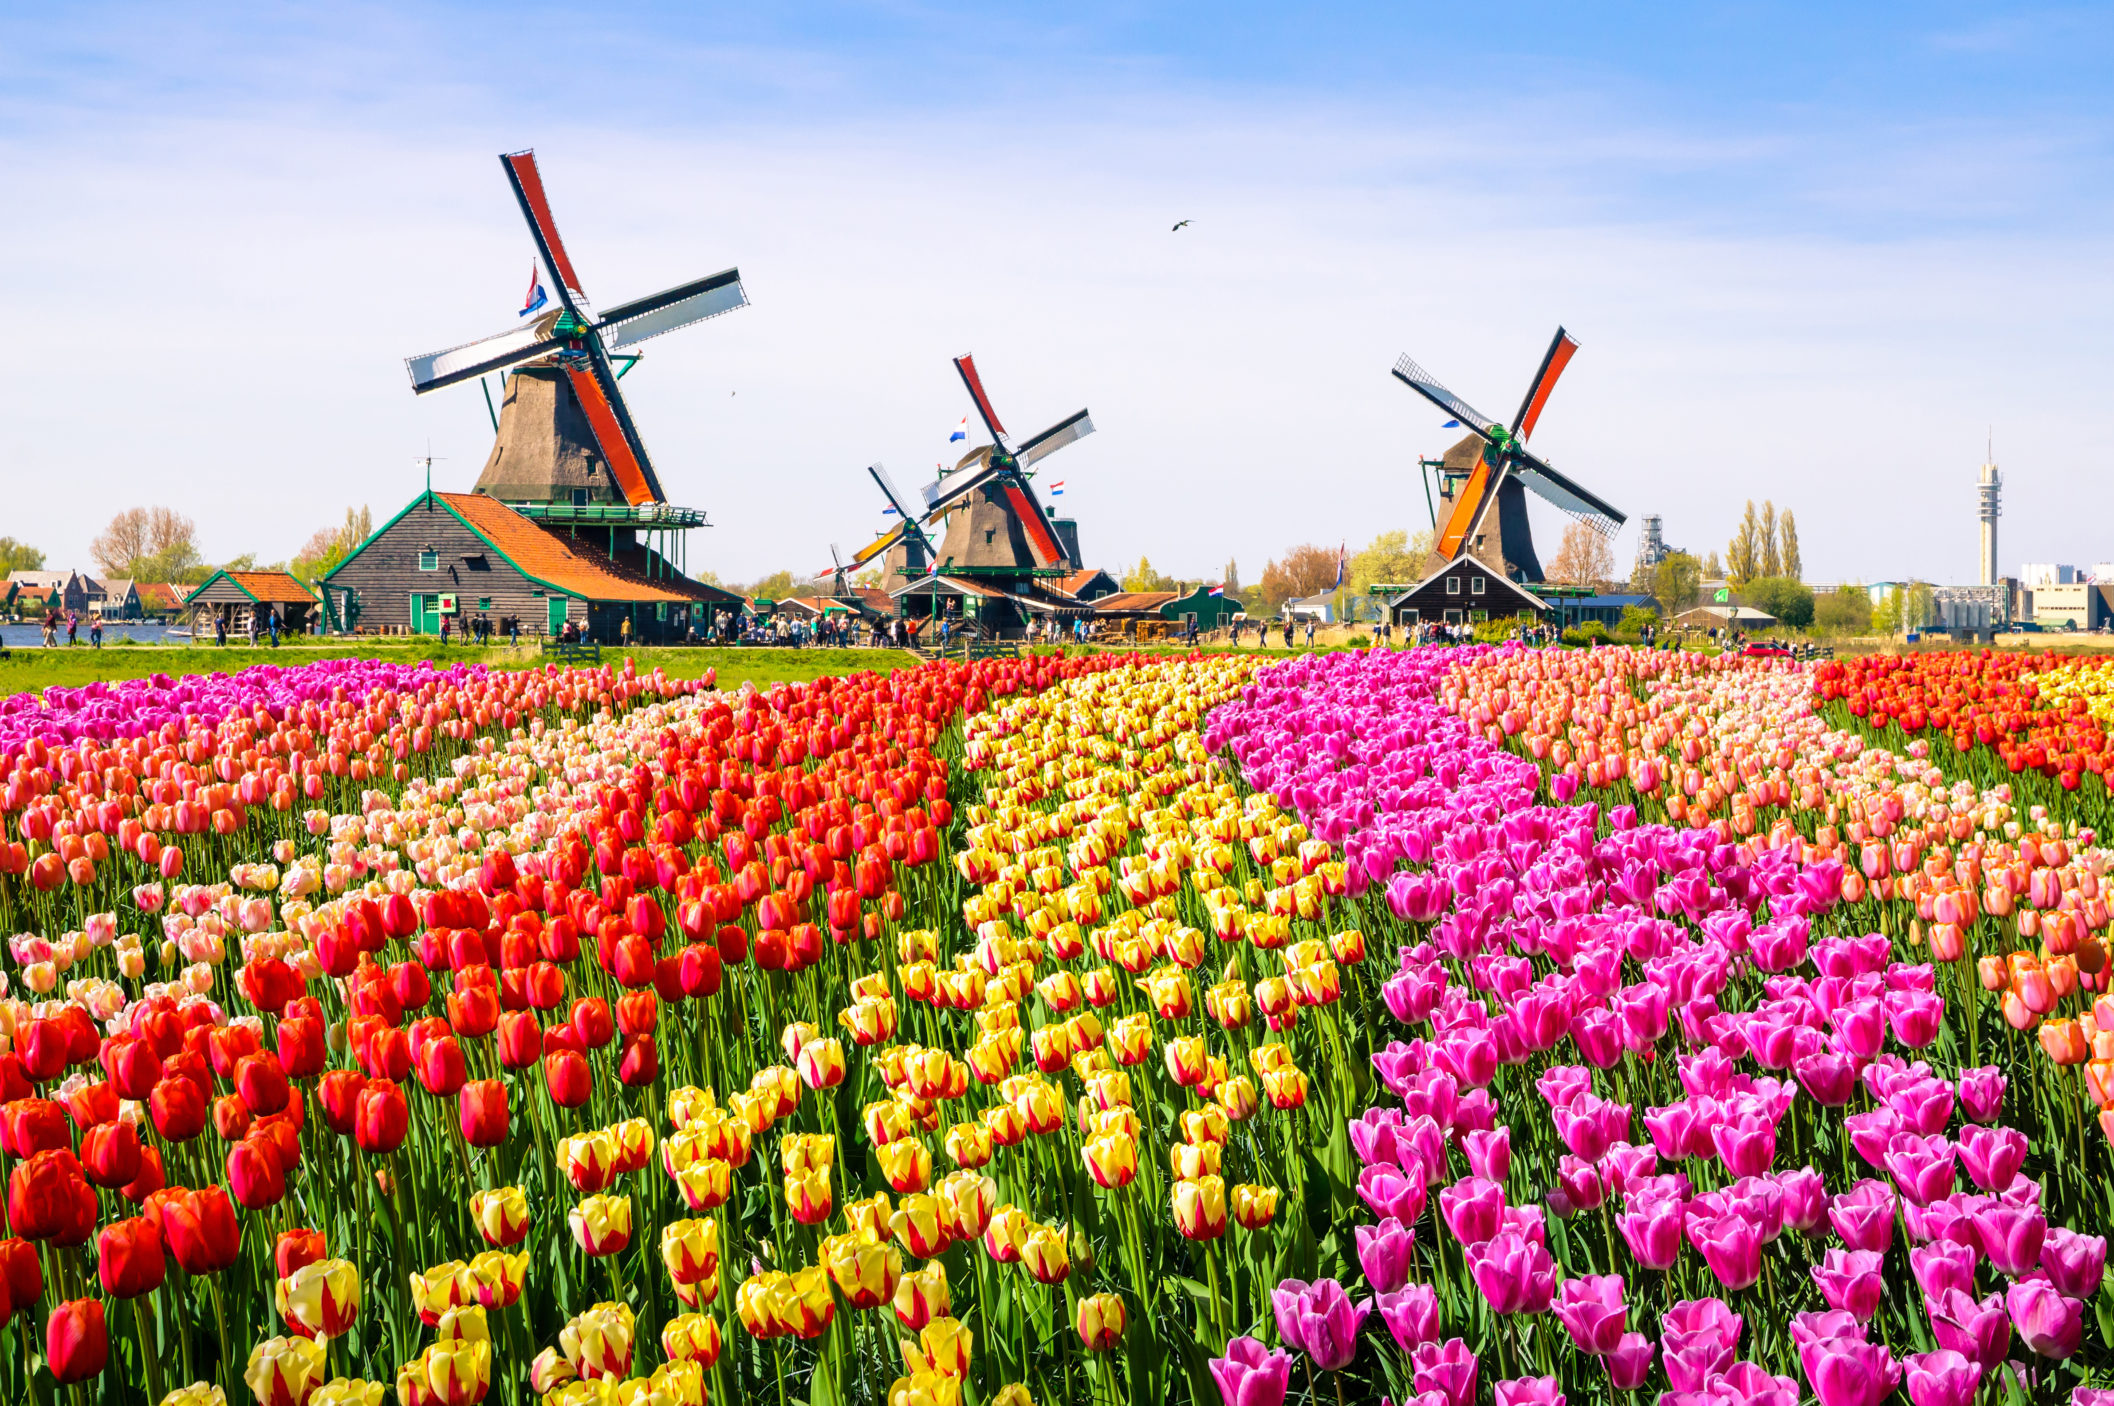 Netherlands [Shutterstock]